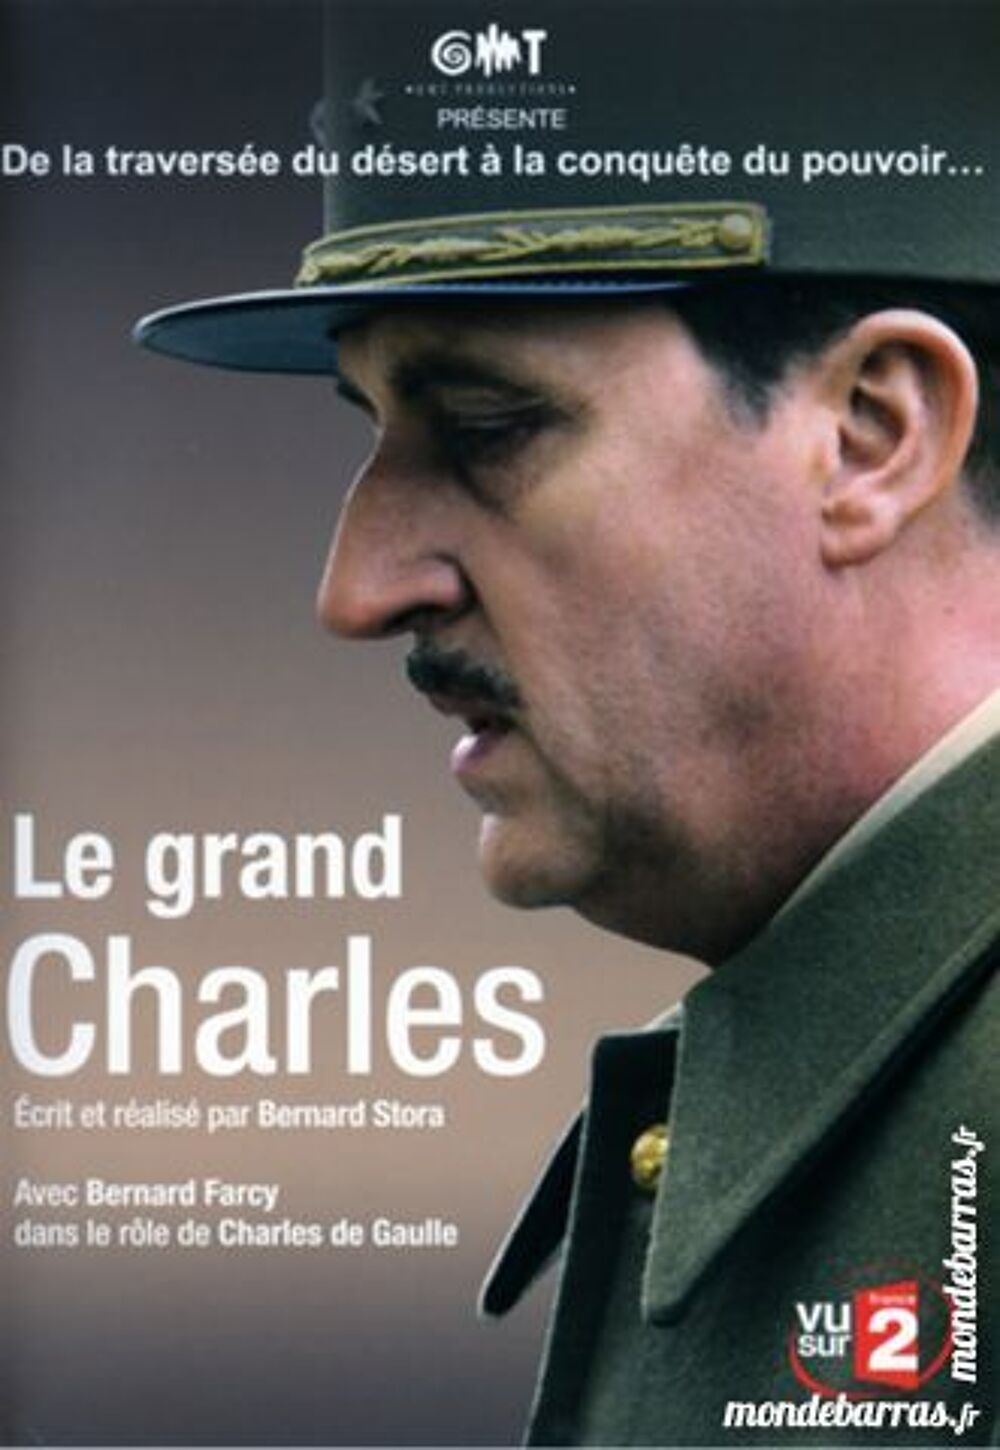 Dvd: Le Grand Charles (290) DVD et blu-ray